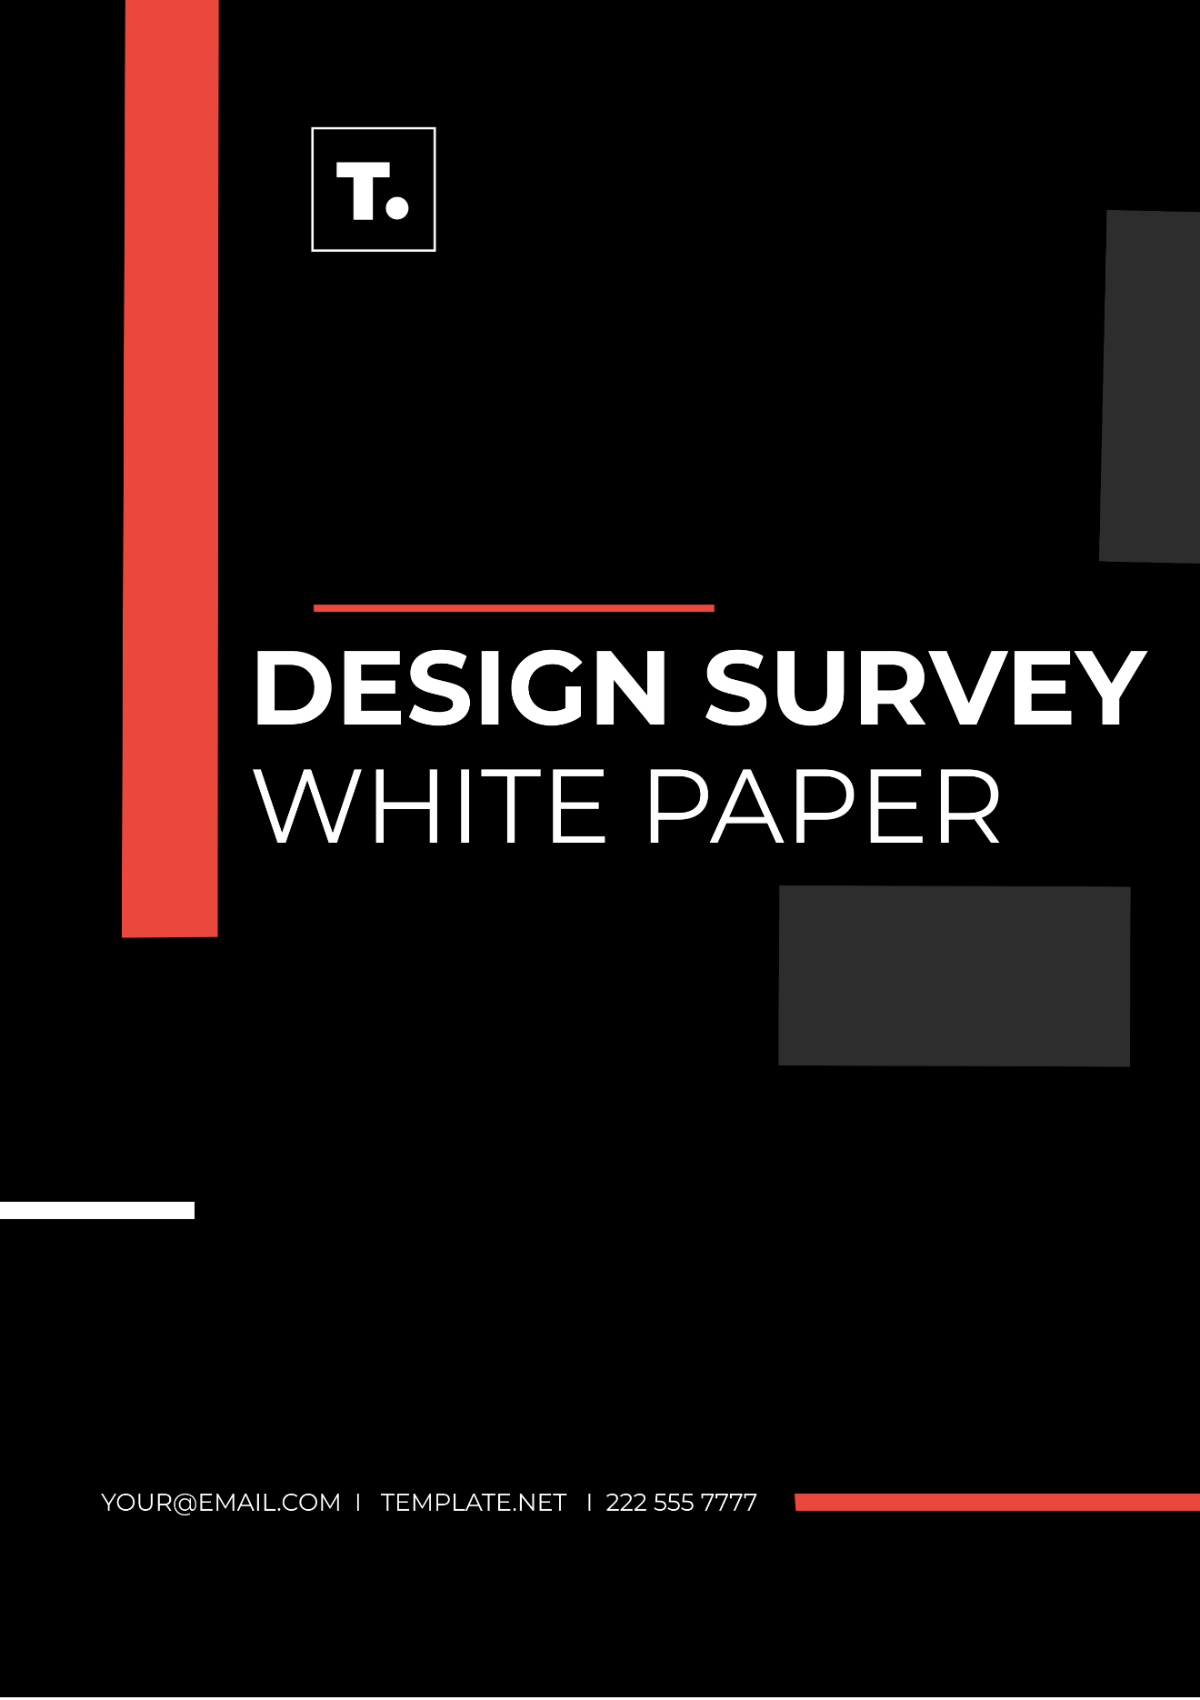 Design Survey White Paper Template